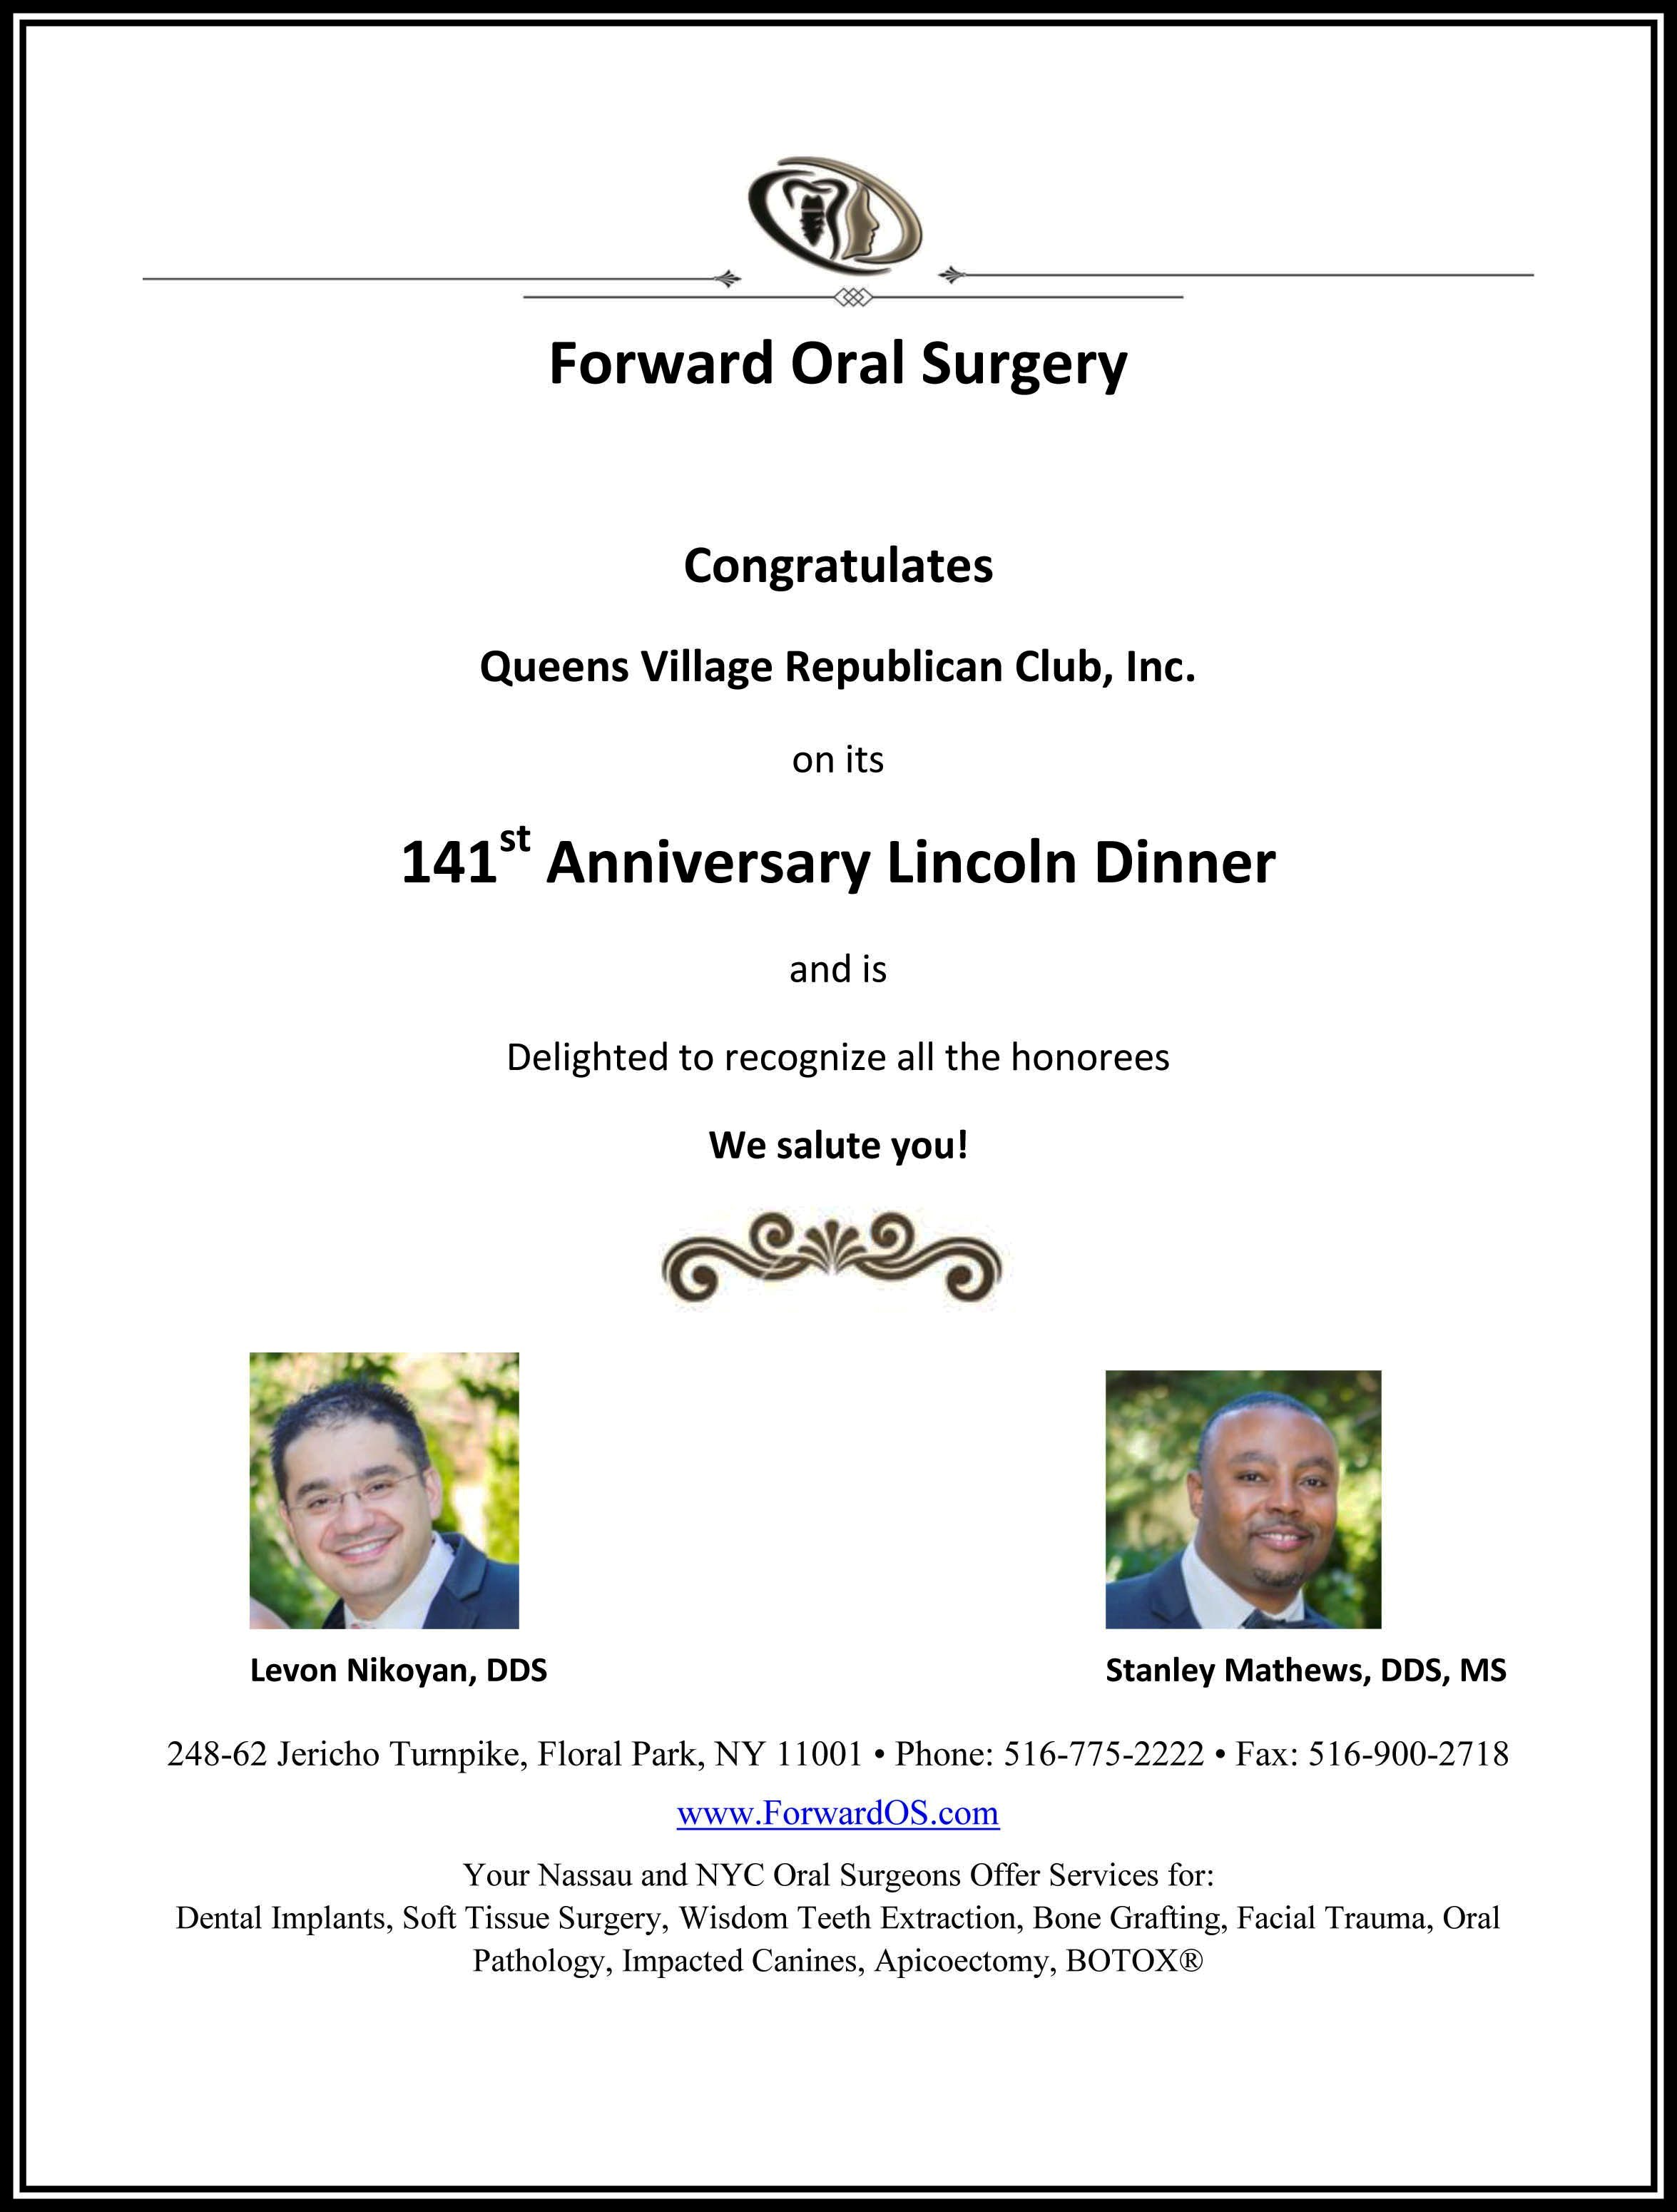 Forward Oral Surgery Republican Dinner Journal Ad